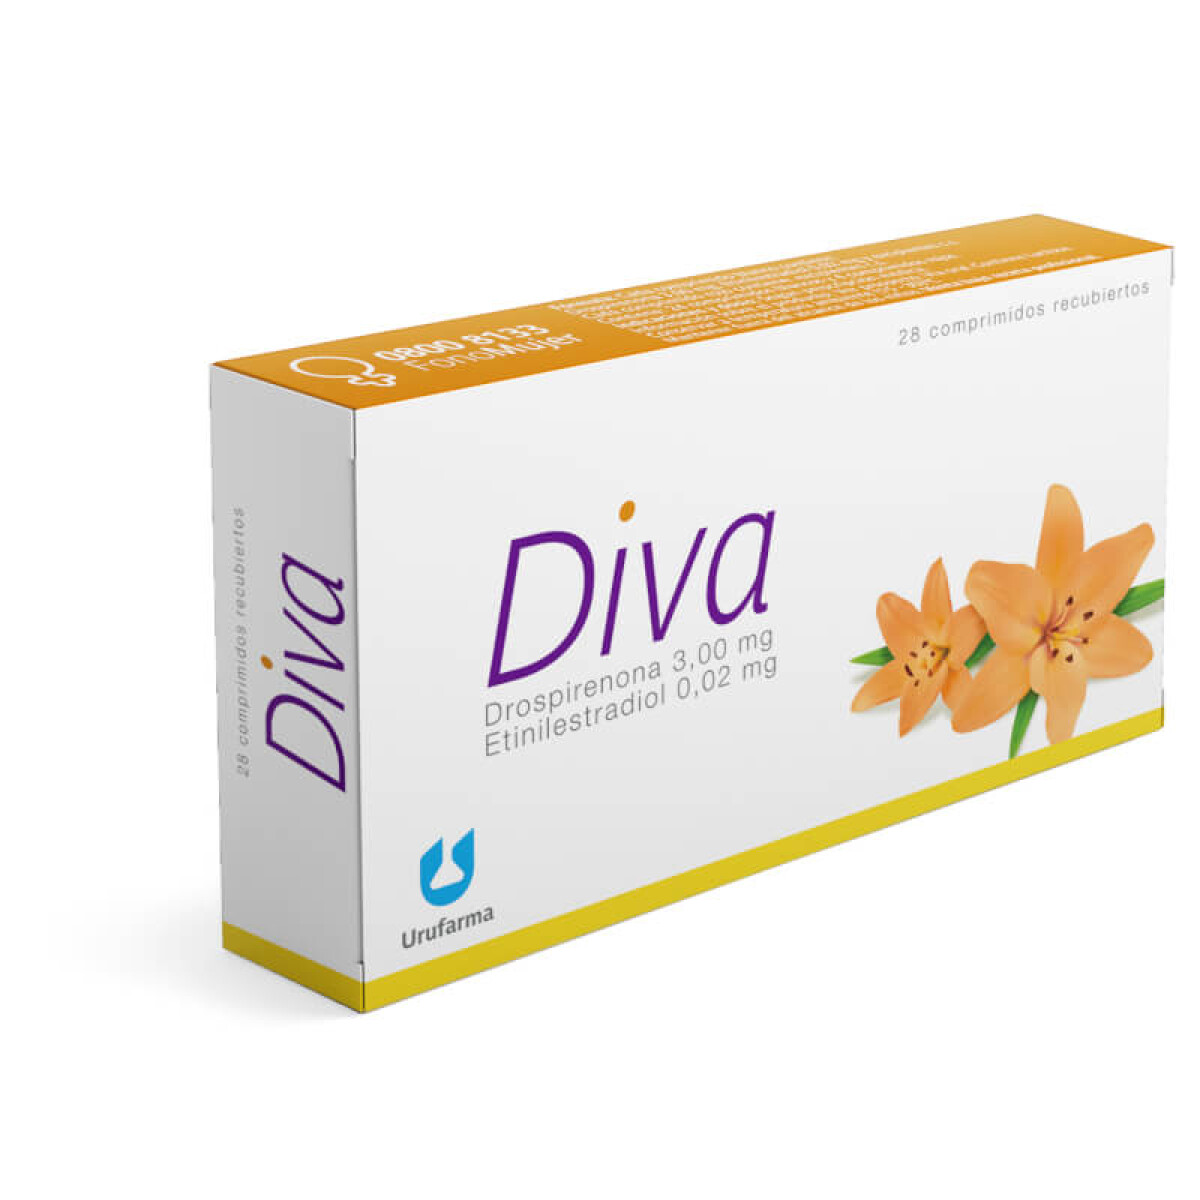 Anticonceptivas Diva 28 